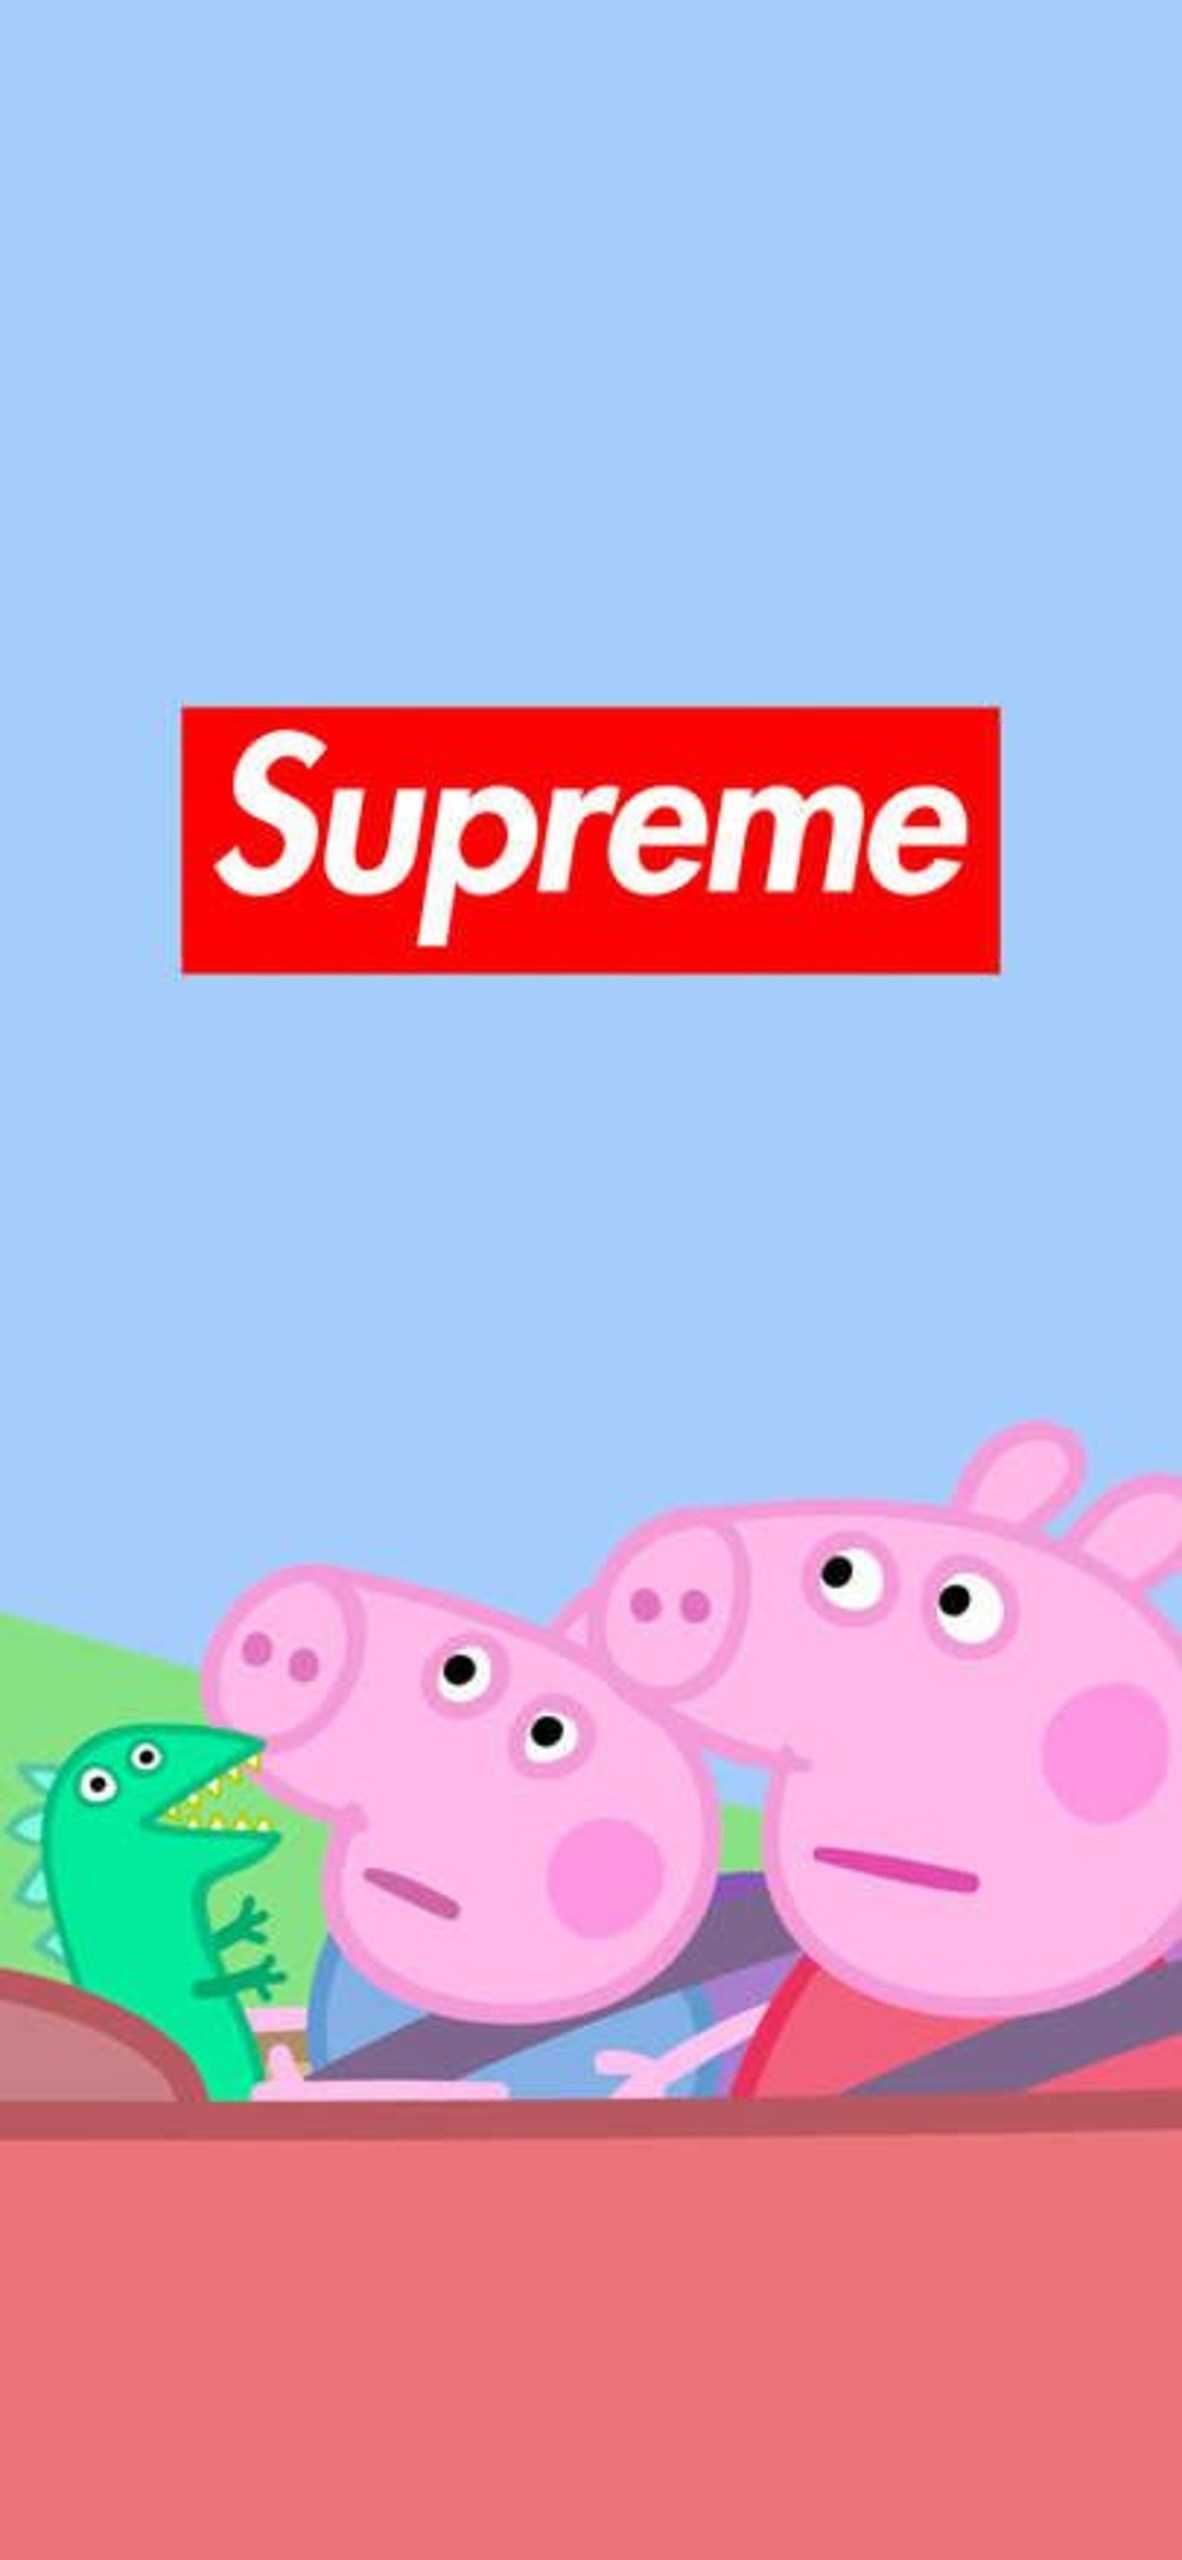 Peppa Pig House Supreme Phone Wallpaper